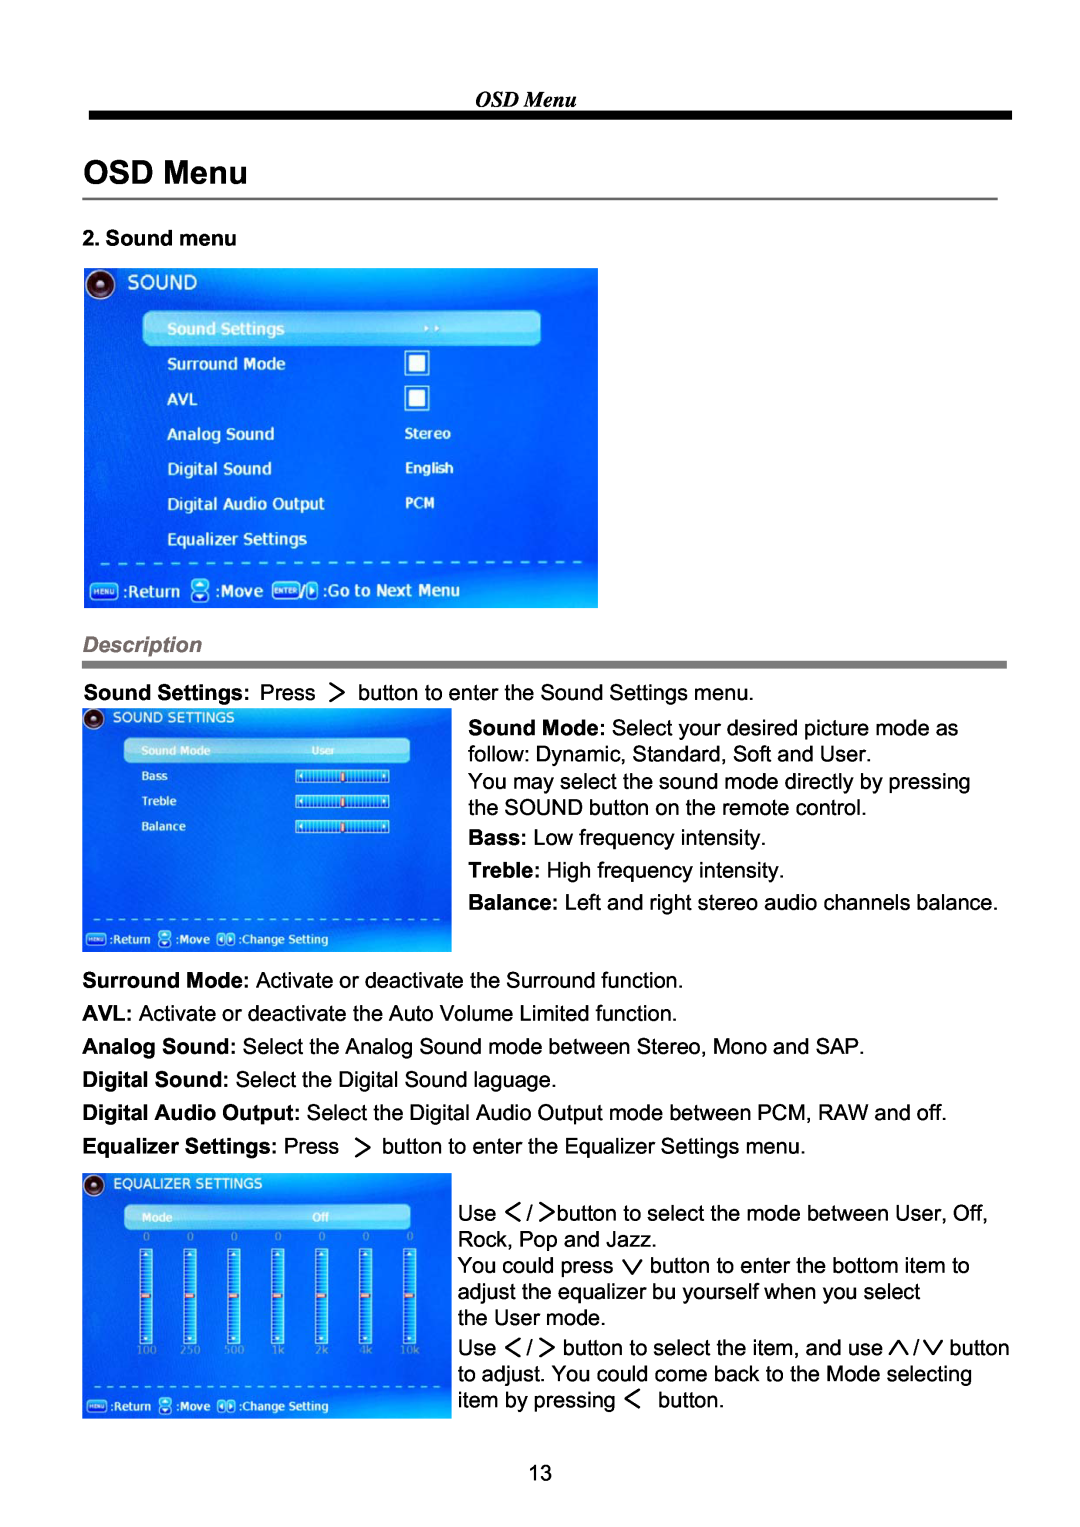 ProScan PLCD3903A manual OSD Menu, Sound menu, Description, Sound Settings Press, Equalizer Settings Press 